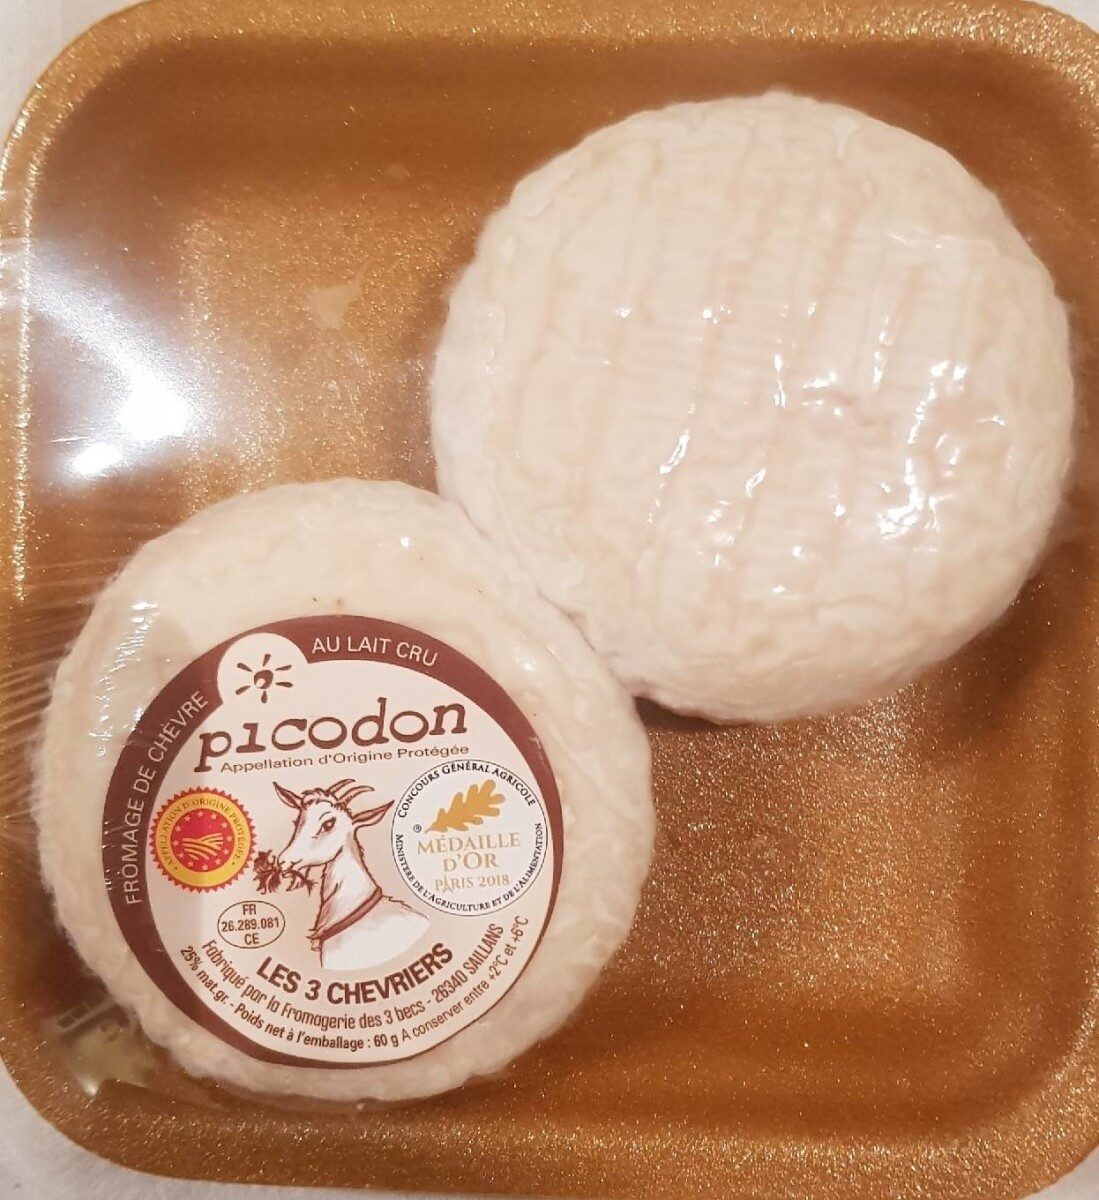 Picodon - Product - fr